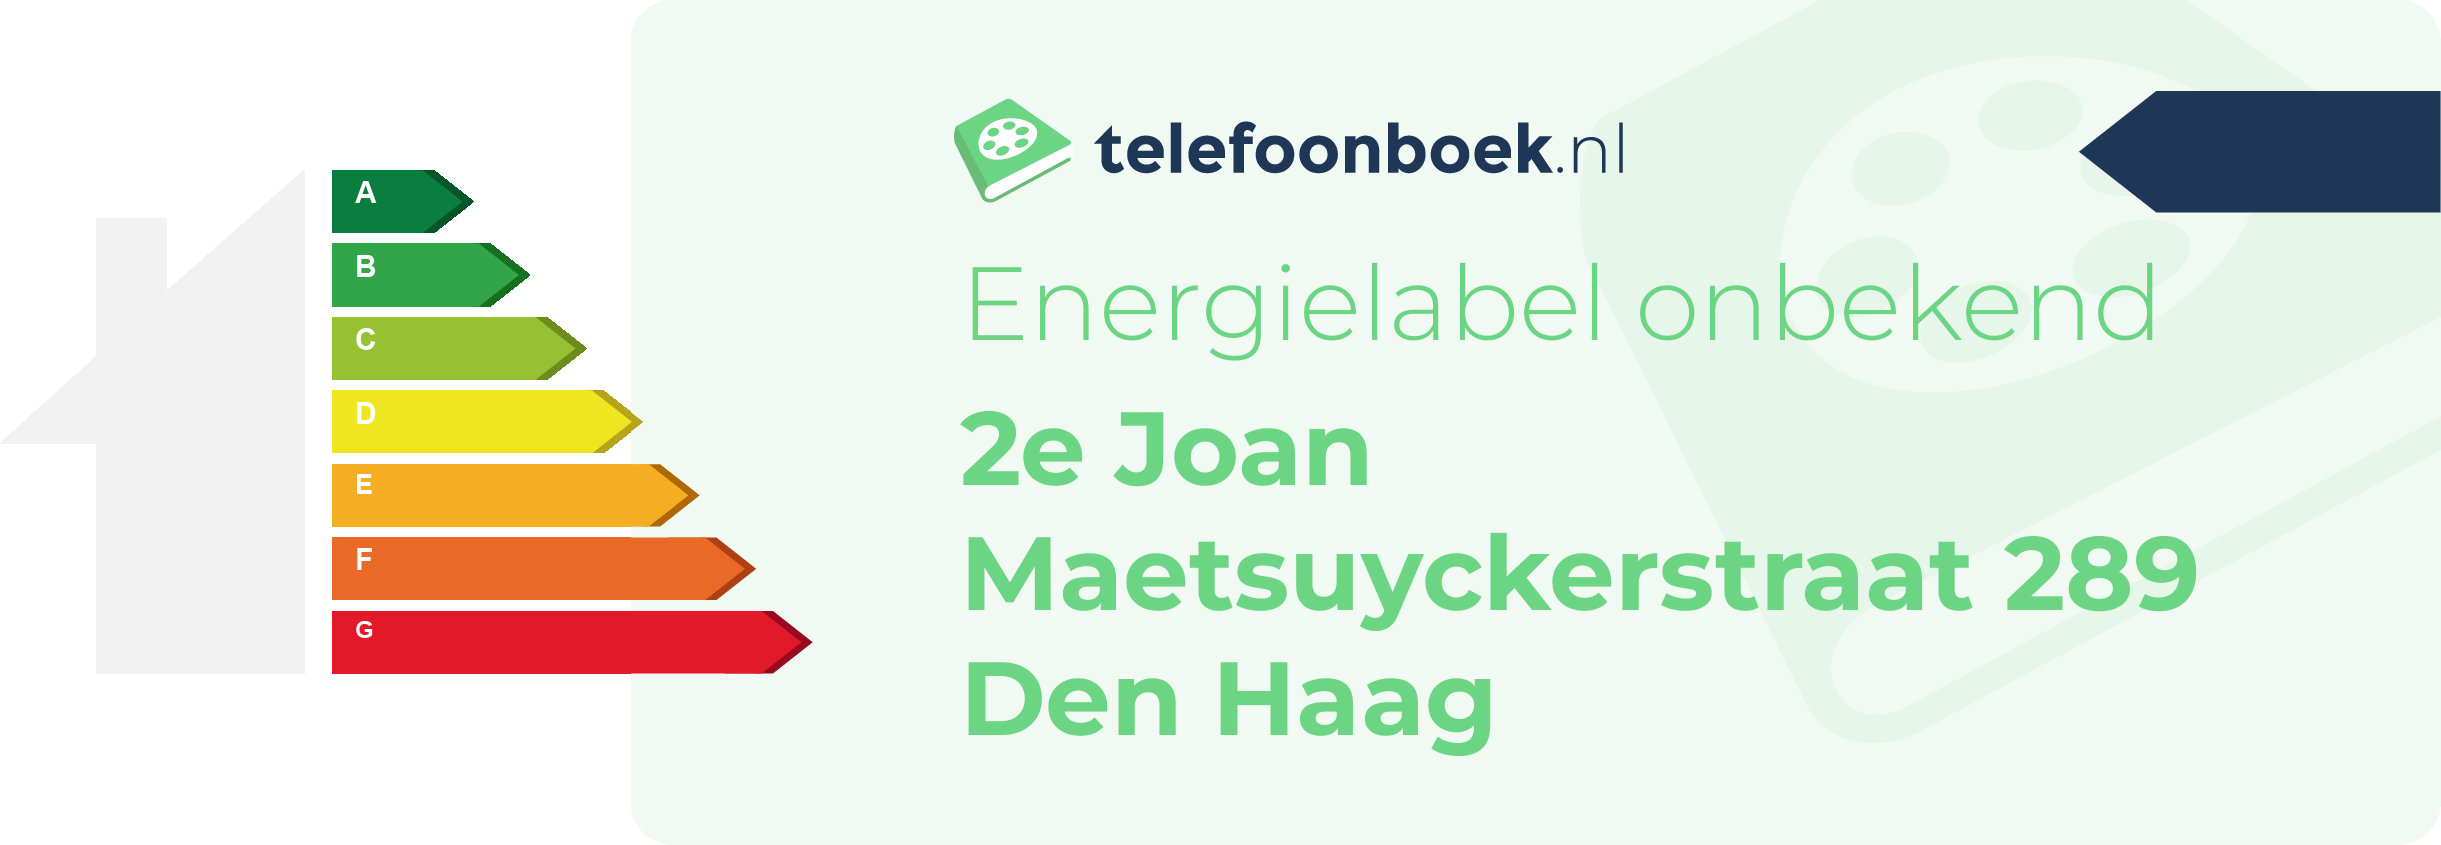 Energielabel 2e Joan Maetsuyckerstraat 289 Den Haag